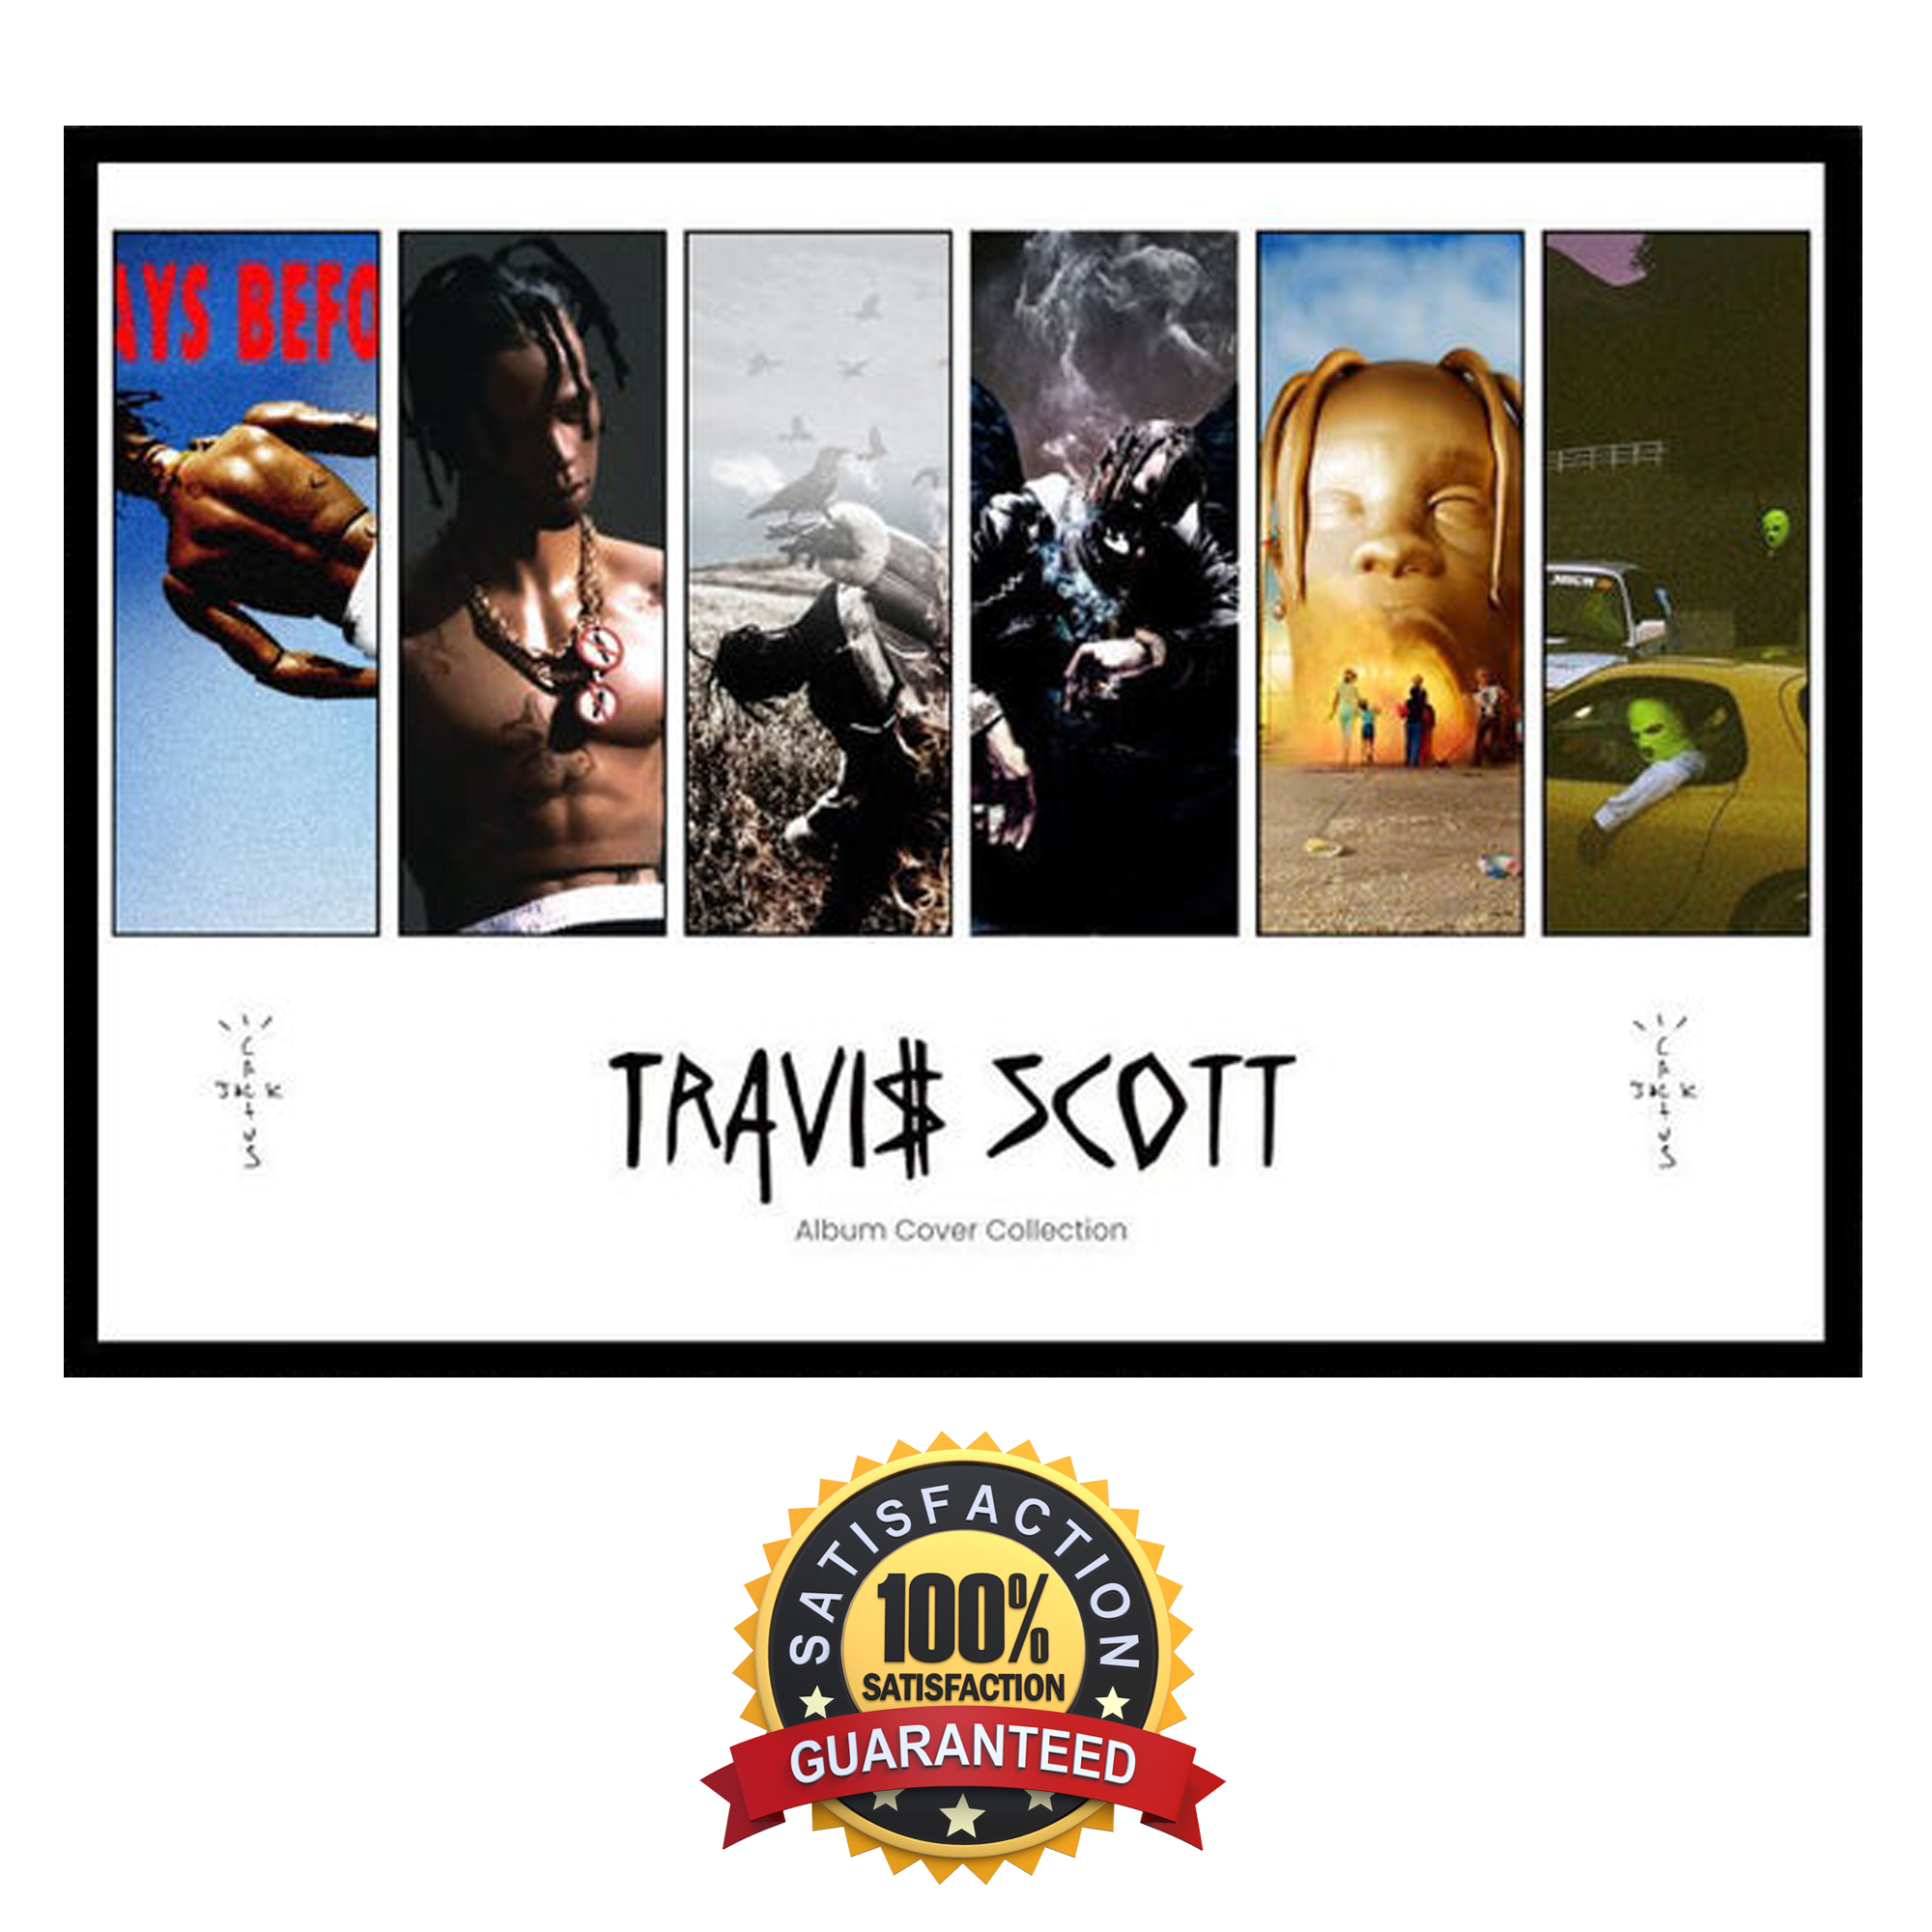 TRAVIS SCOTT Album Cover Poster – Professional Print in HD Cactus Jack  Jackboys Before Rodeo Poster